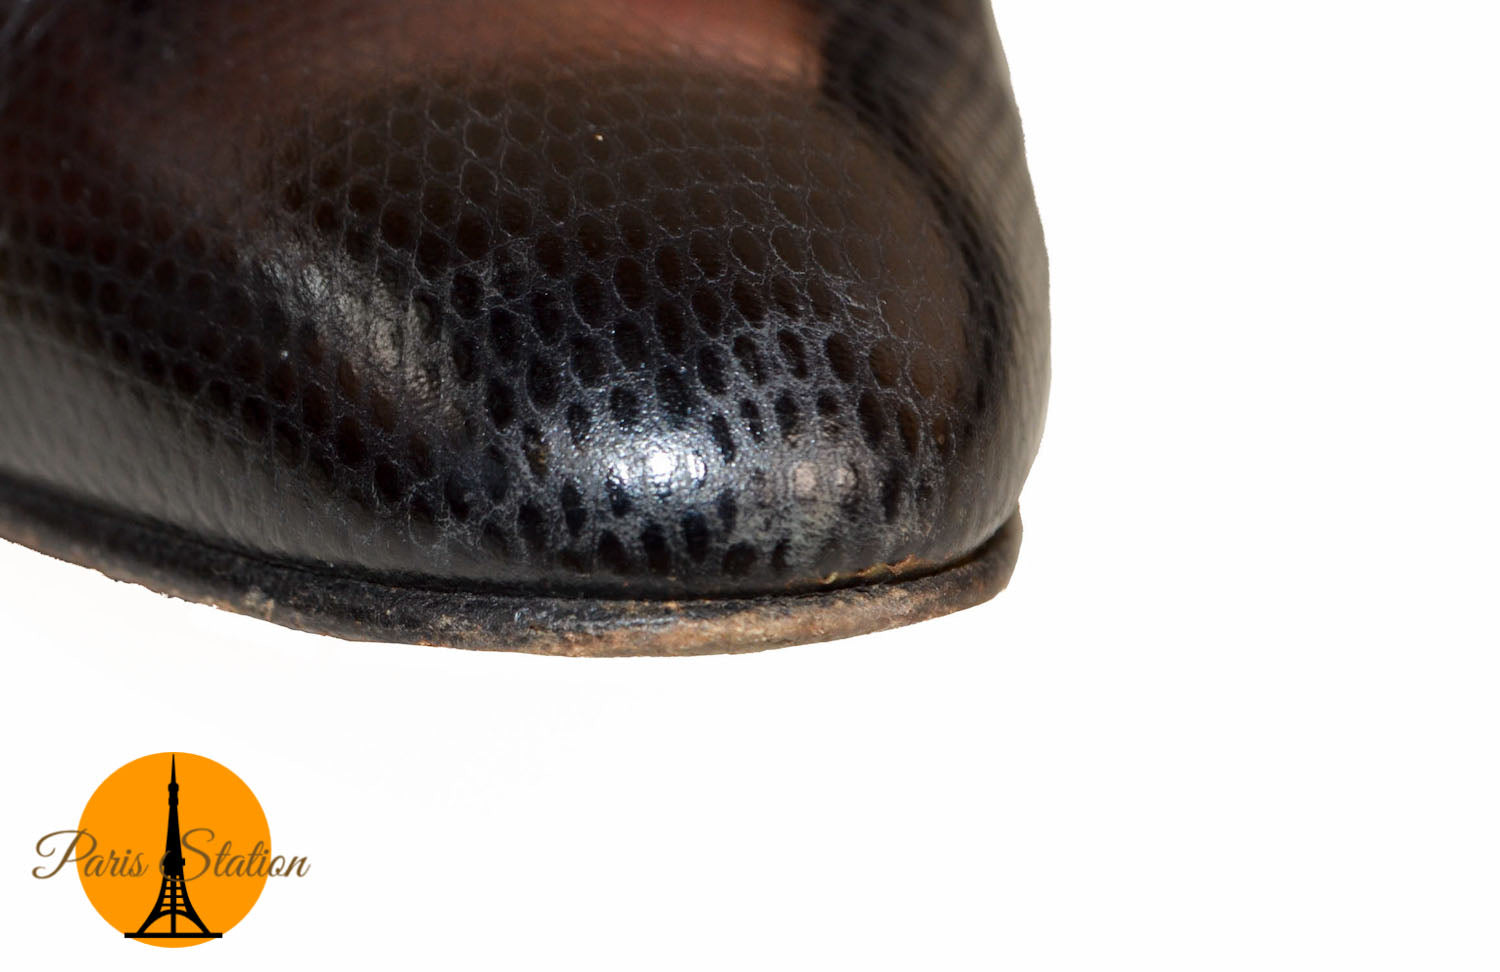 Authentic Salvatore Ferragamo Black Snakeskin Embossed Leather Pumps Size 6.5